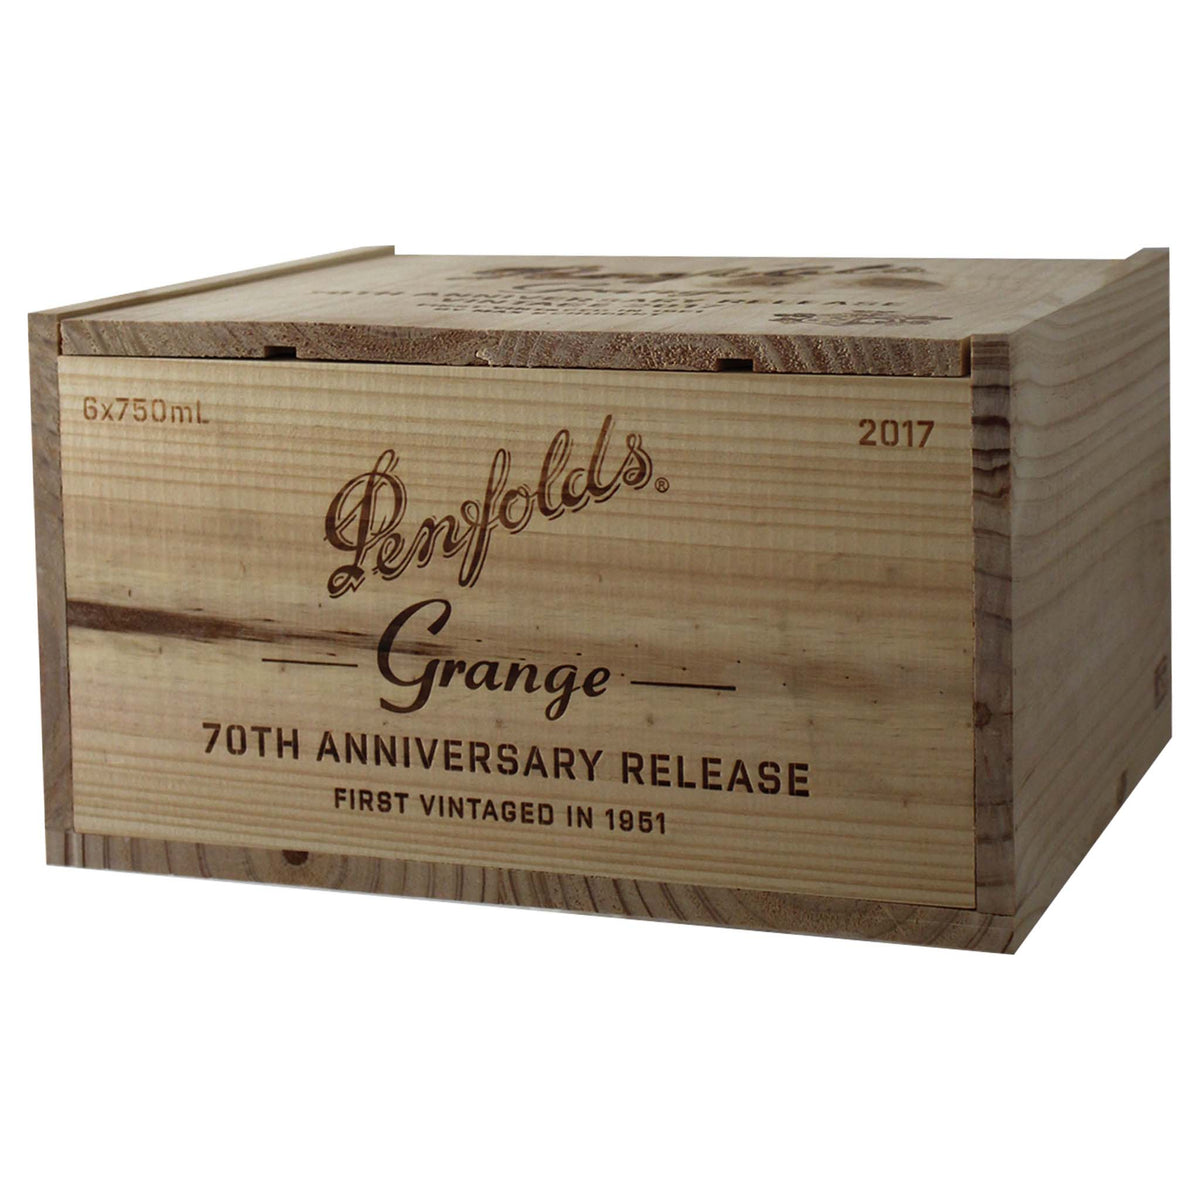 Penfolds Grange 2017 Timber Box (6 pack)